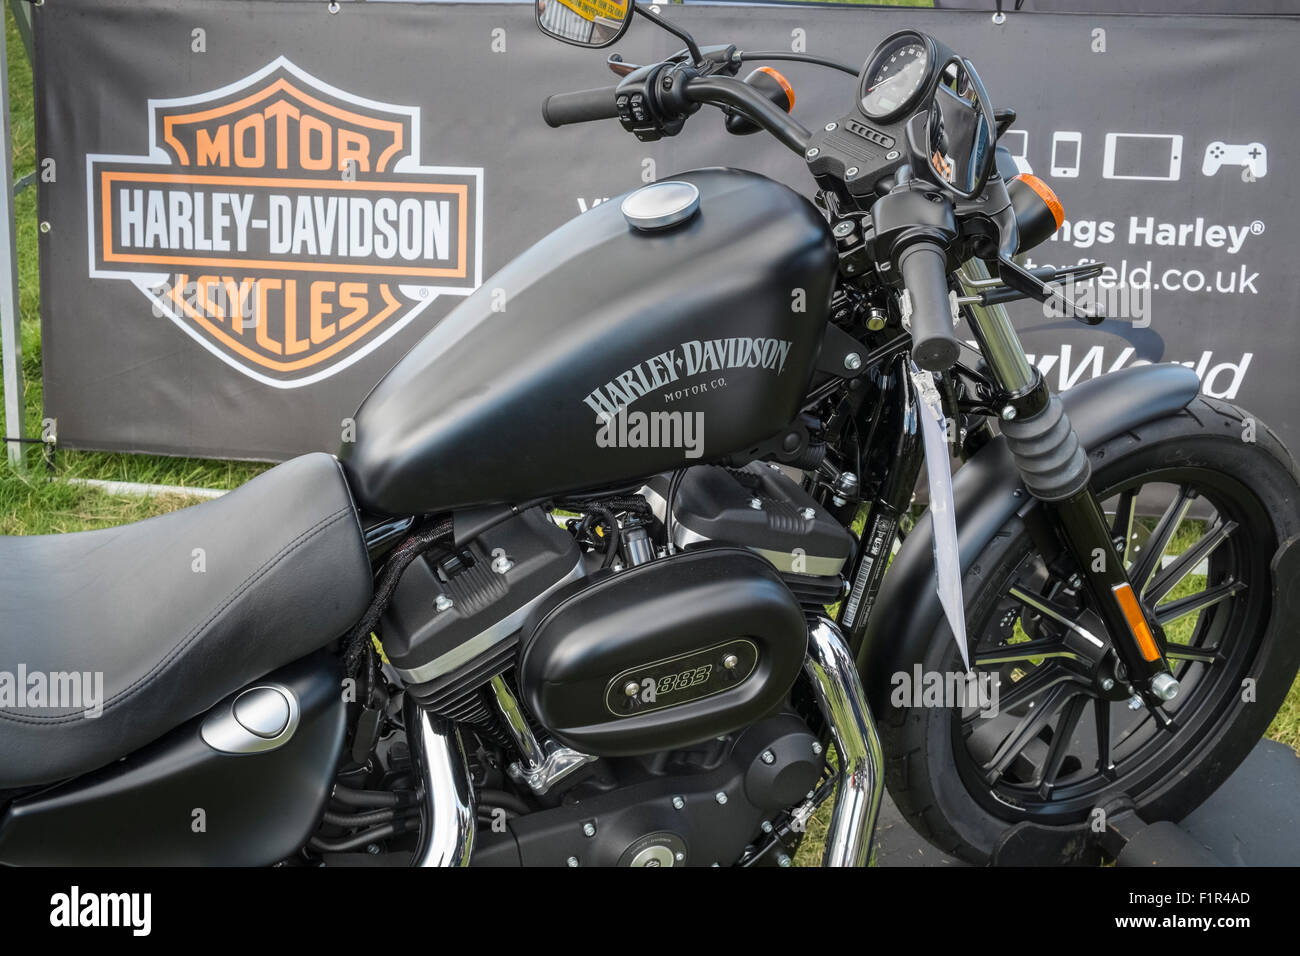 Nouvelle moto Harley-Davidson sur l'affichage. Banque D'Images